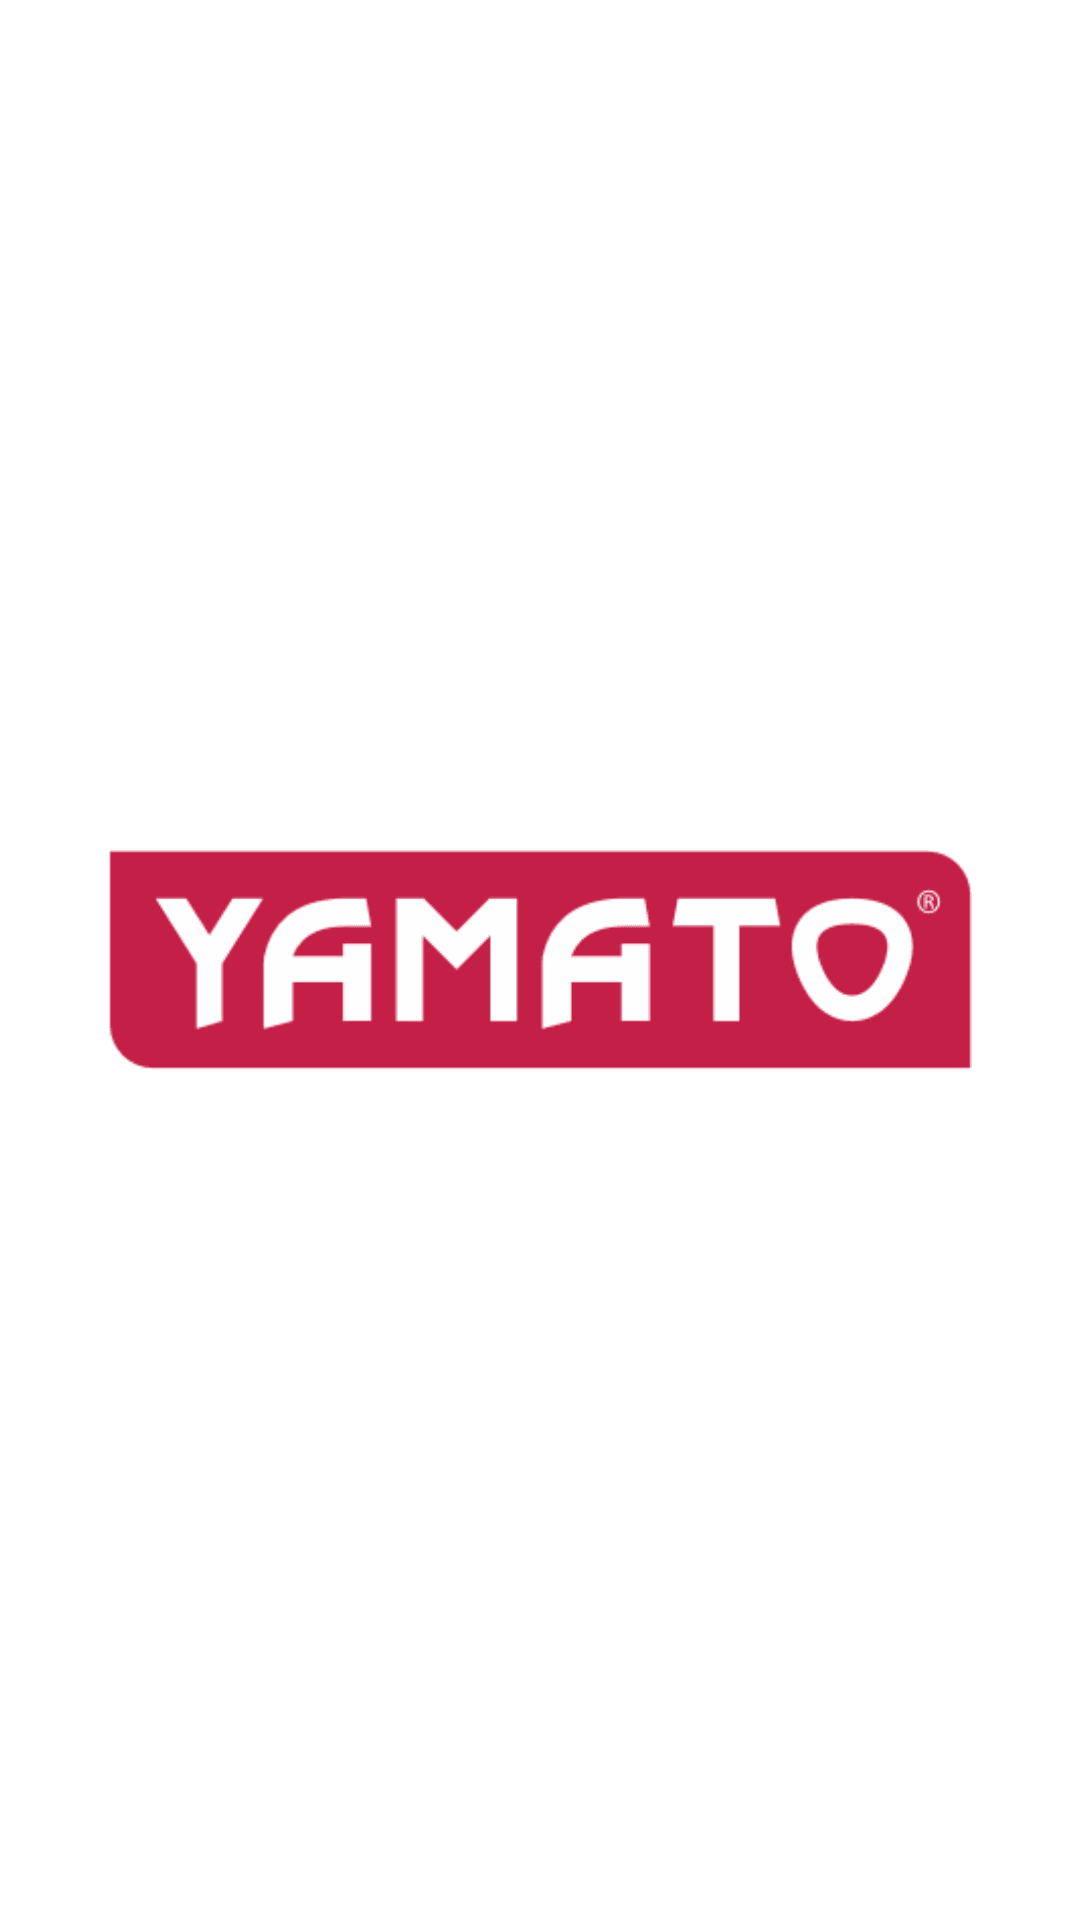 Yamato - Levigatrice orbitale elettrica 200W mm.187x90 Yamato